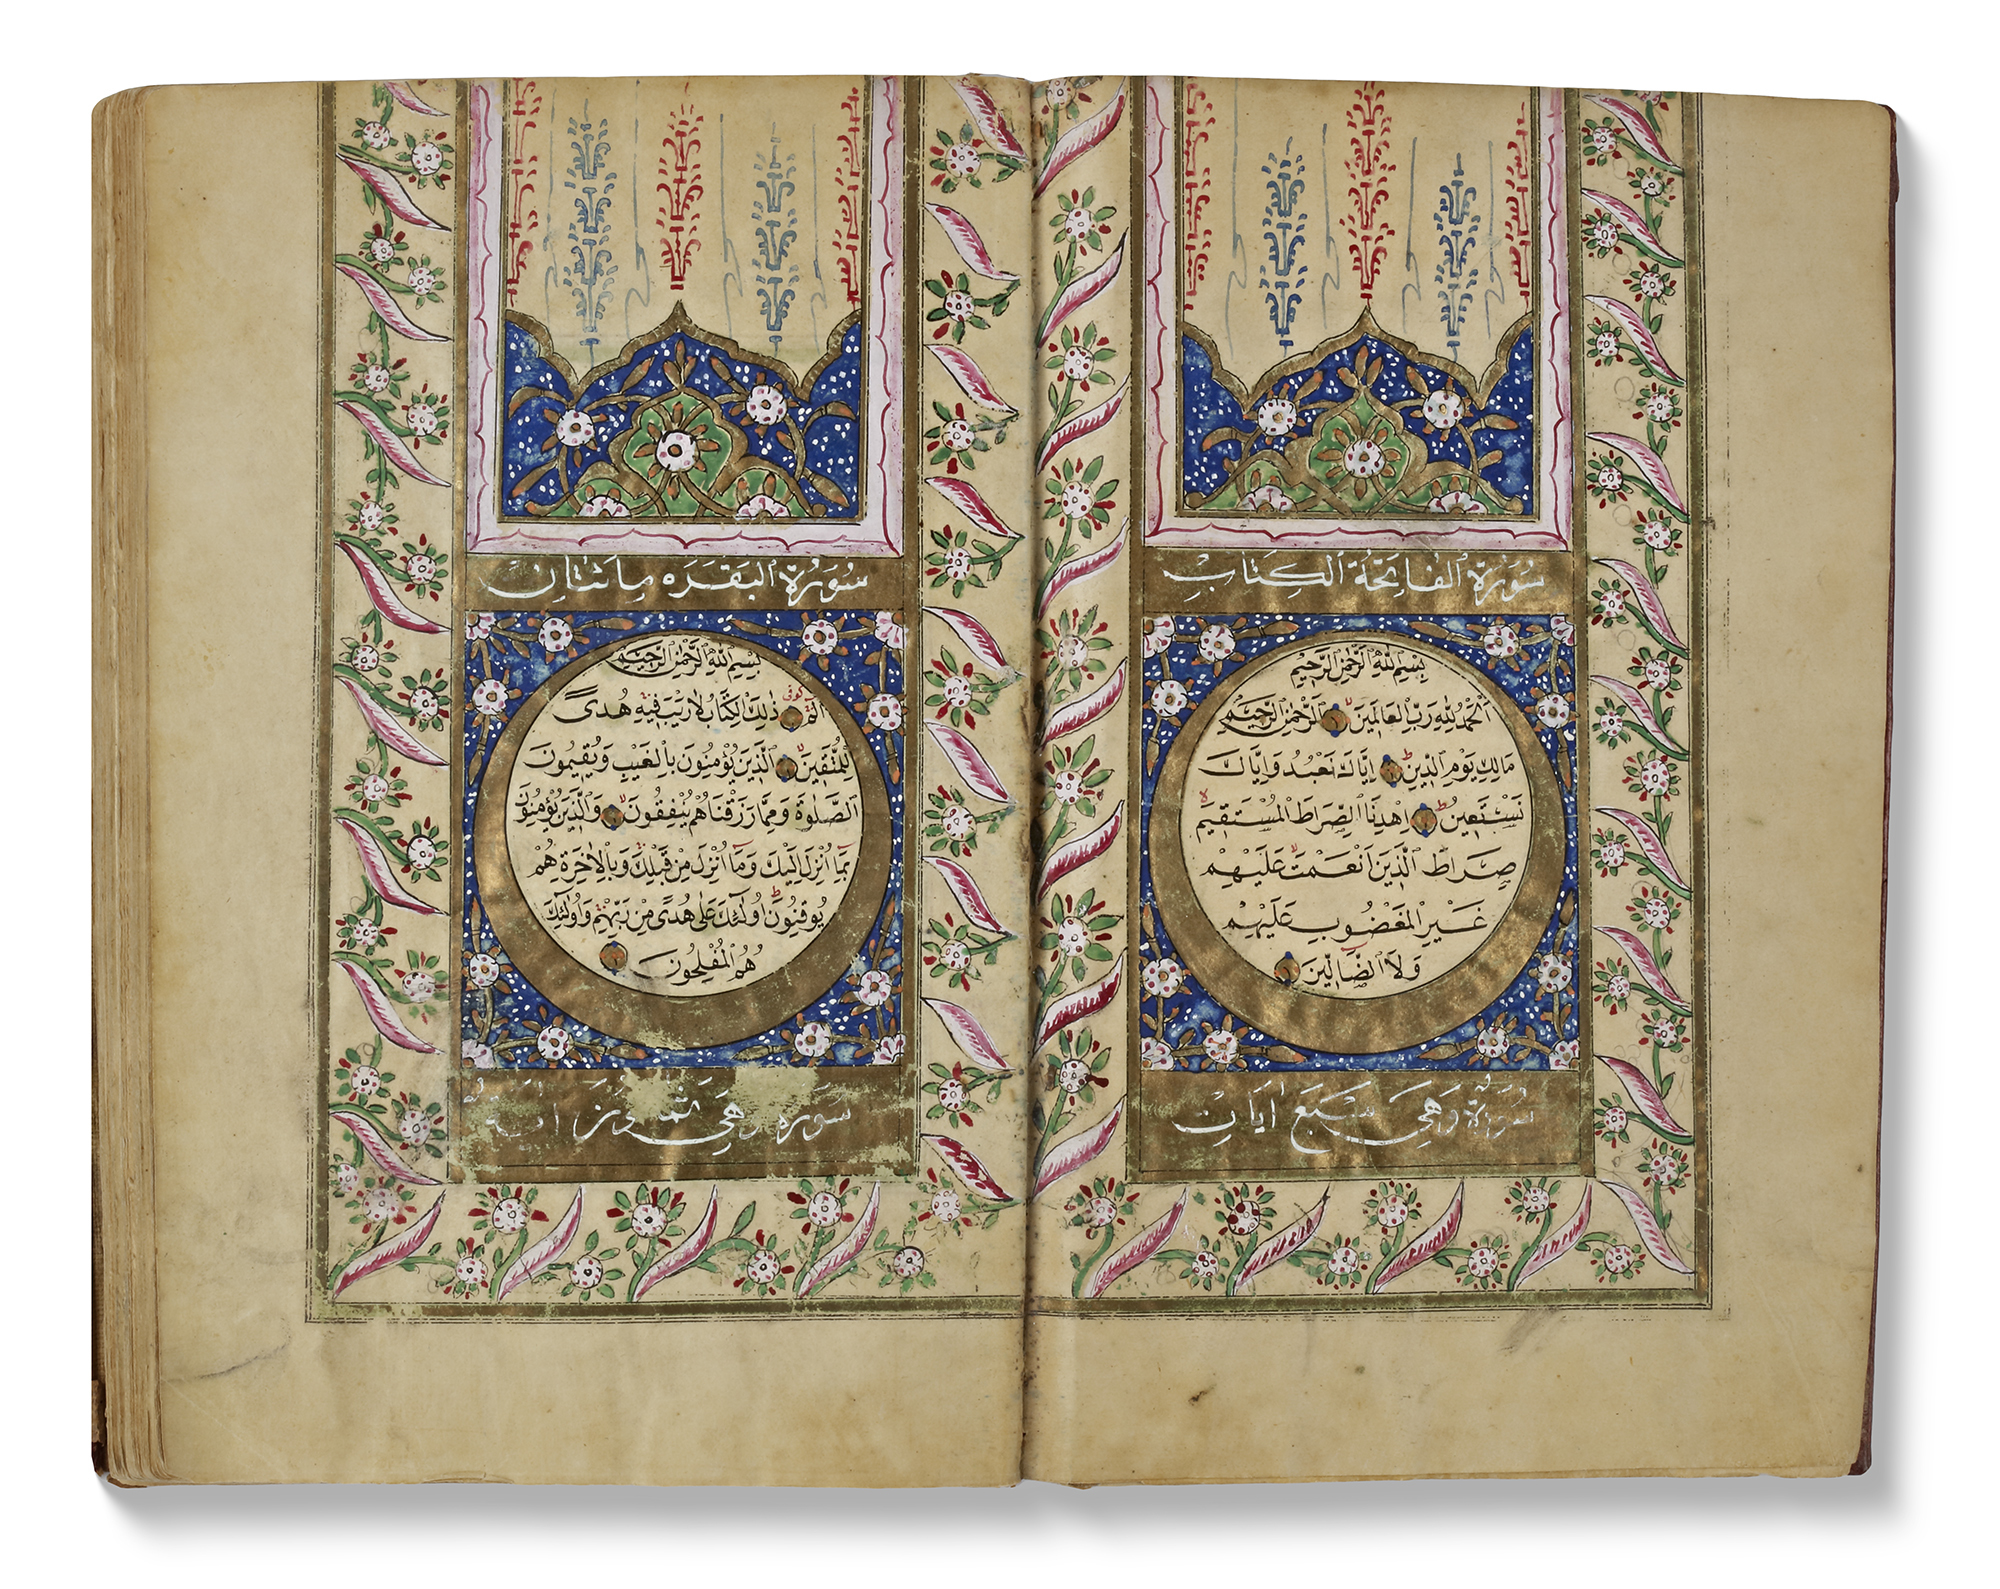 A FINE OTTOMAN QURAN, TURKEY, WRITTEN BY OMAR AL-FAWRABI STUDENT OF OMAR RUSHDI, DATED 1273 AH/1856 - Image 14 of 20